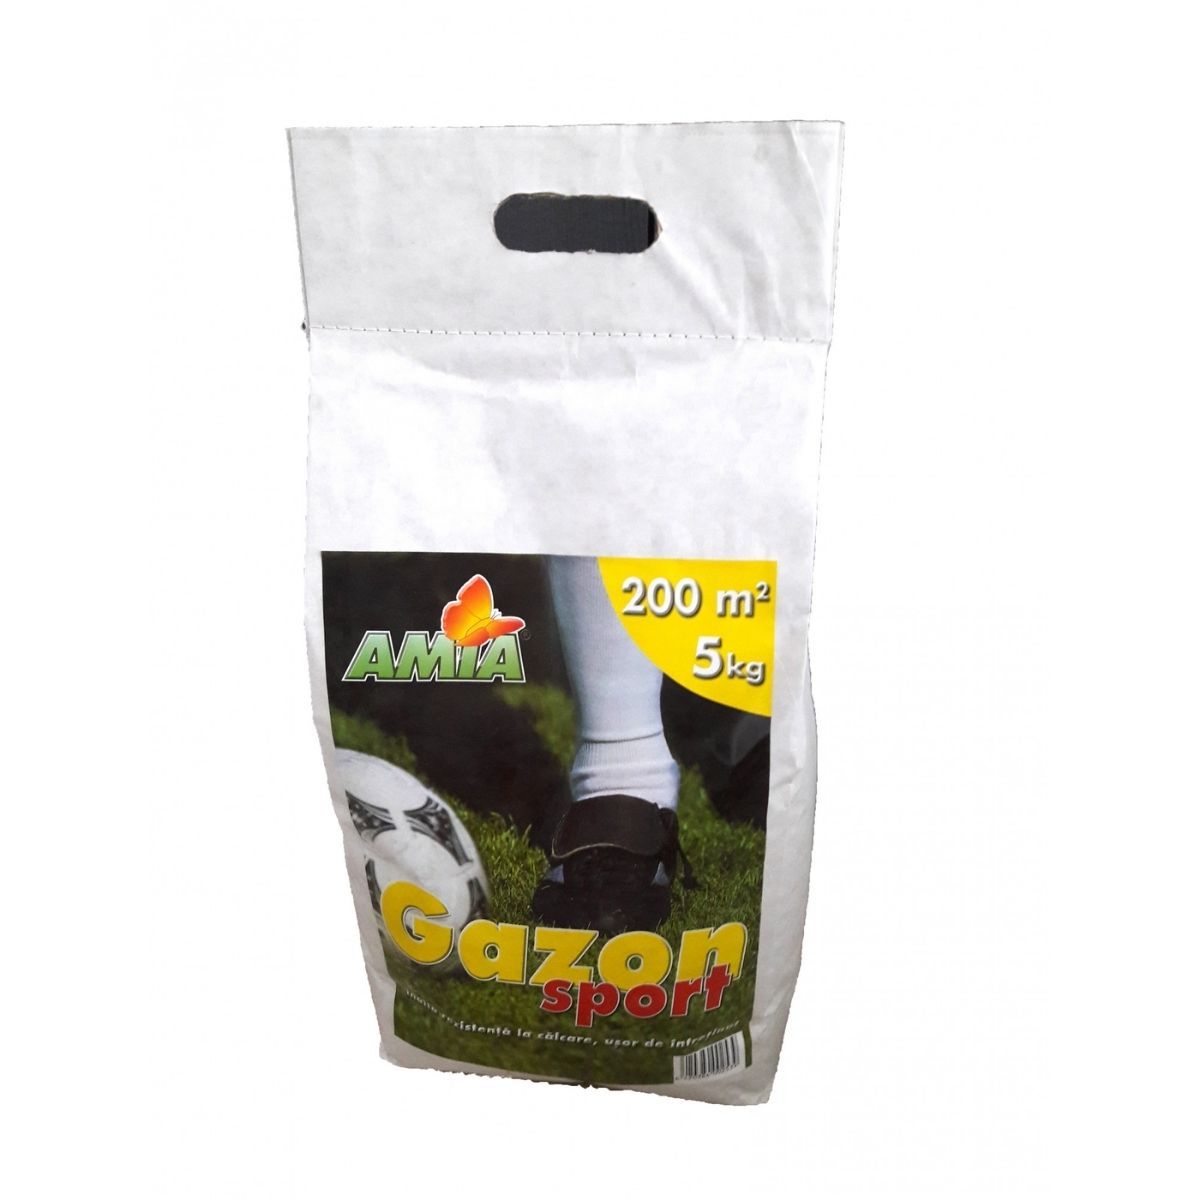 Seminte gazon - Seminte Gazon SPORT AMGS5 AMIA 5 Kg, hectarul.ro